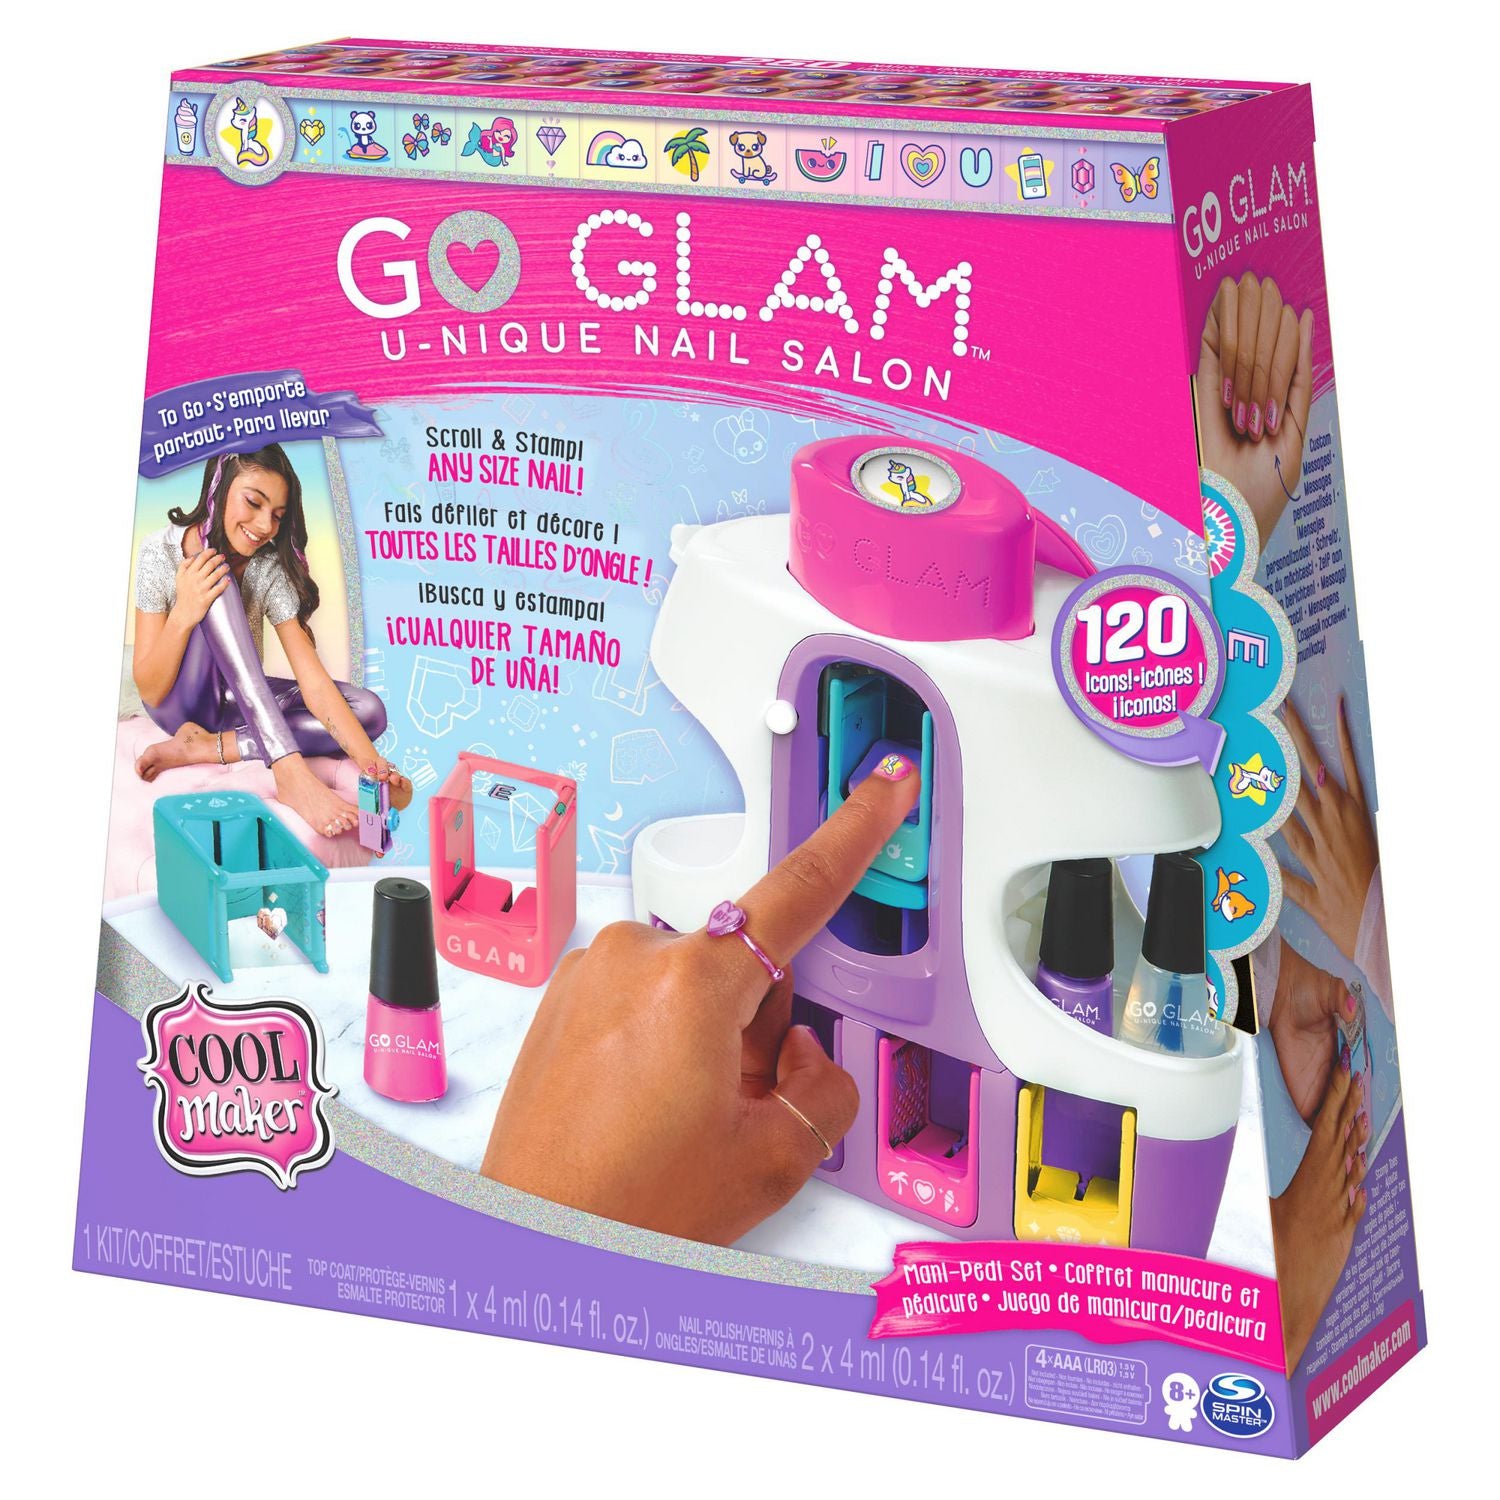 Cool Maker Go Glam U-Nique Nail Salon Req 4 AAA Batteries